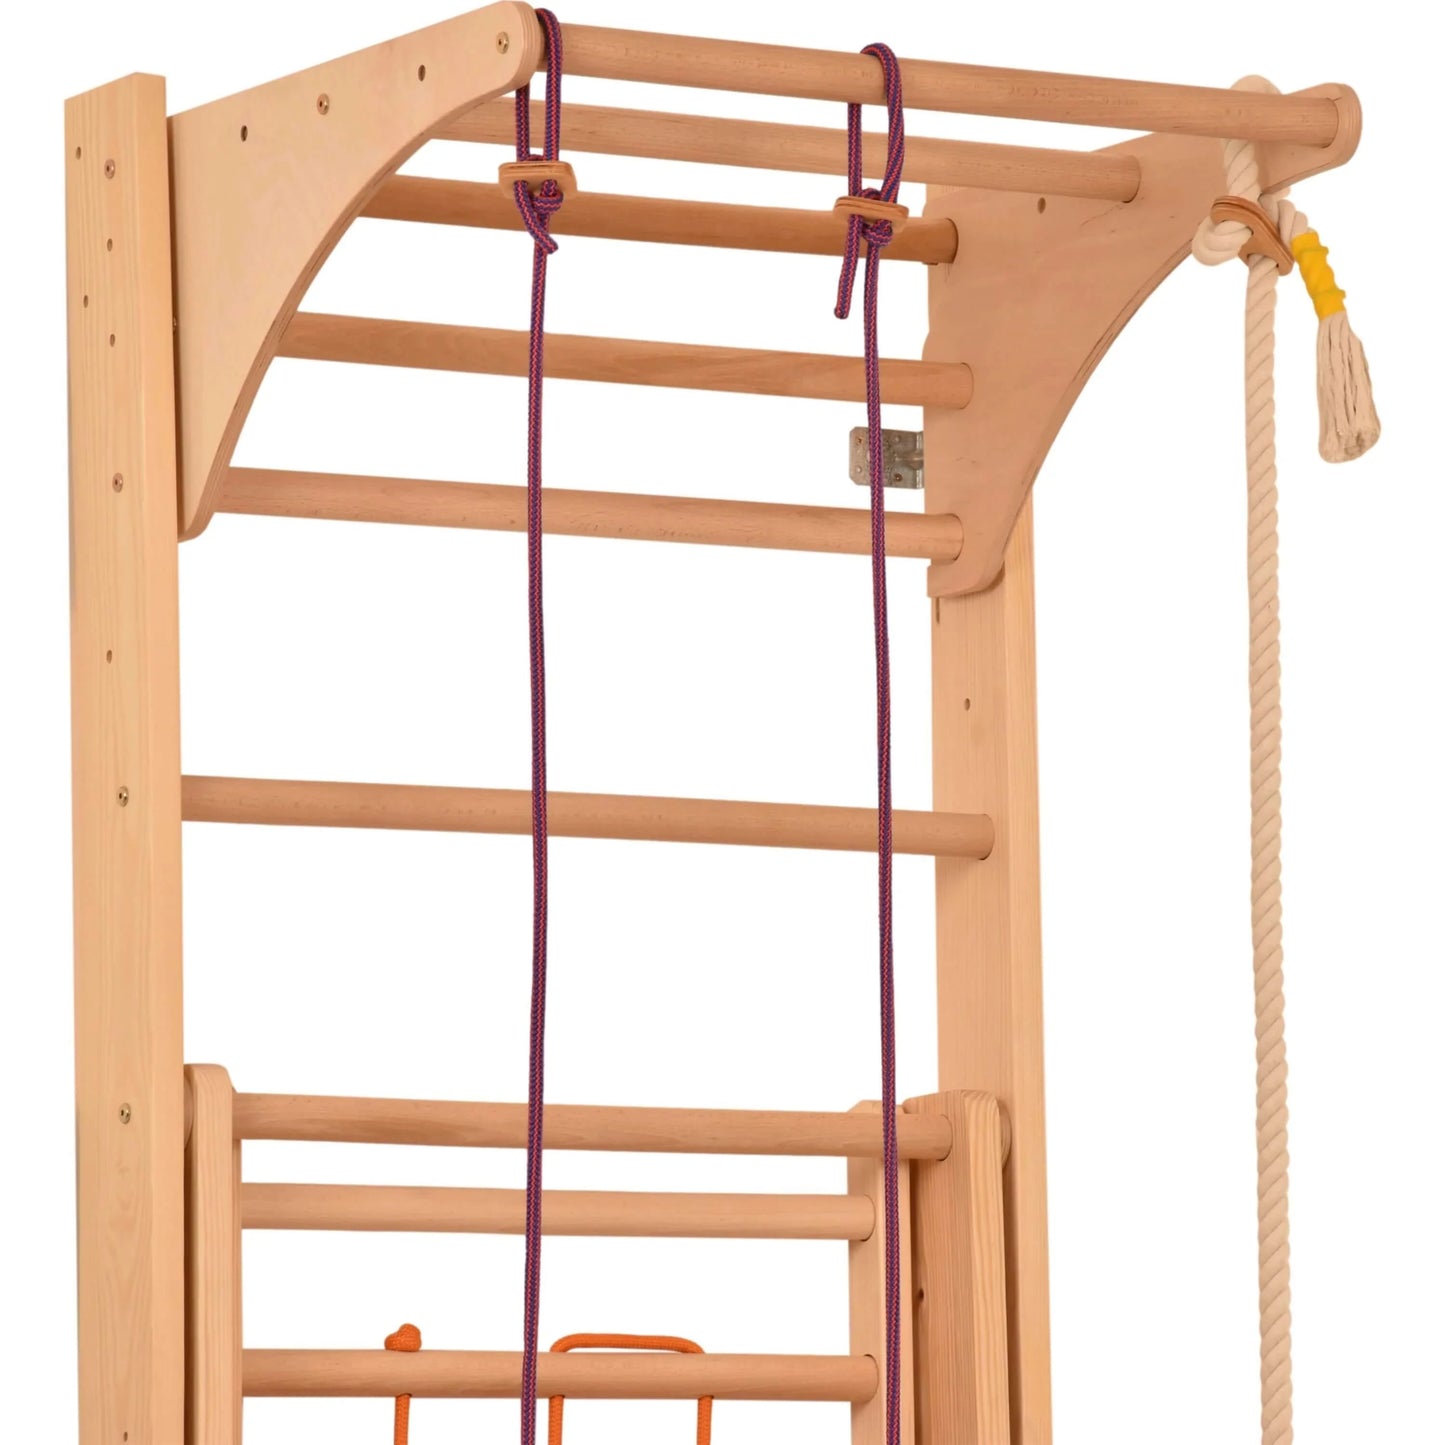 Indoor climbing frame "Julie" - untreated wood